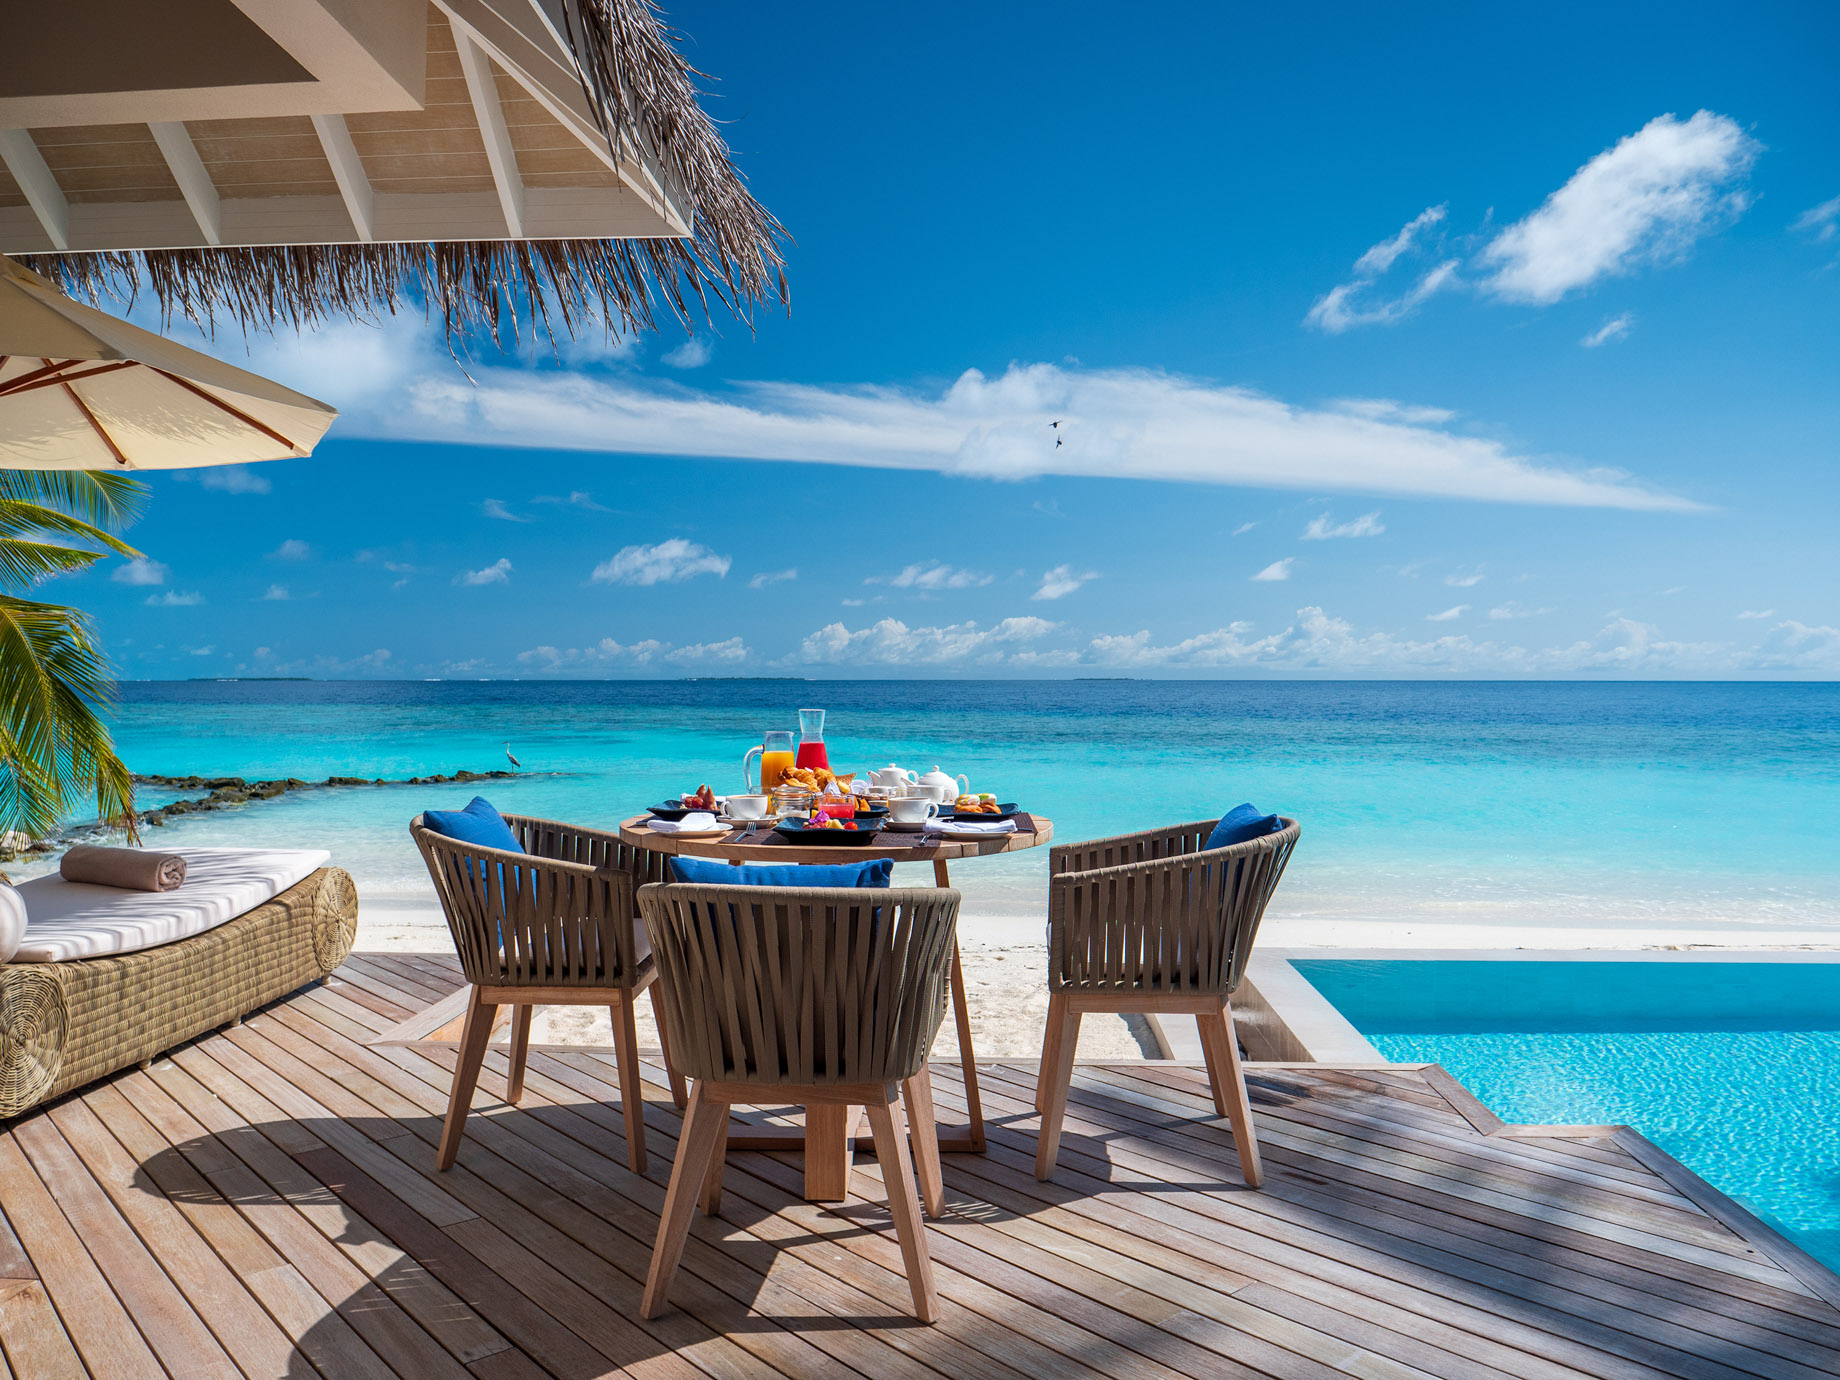 Baglioni Resort Maldives – Maagau Island, Rinbudhoo, Maldives – Beach Villa Pool Deck Dining Ocean View